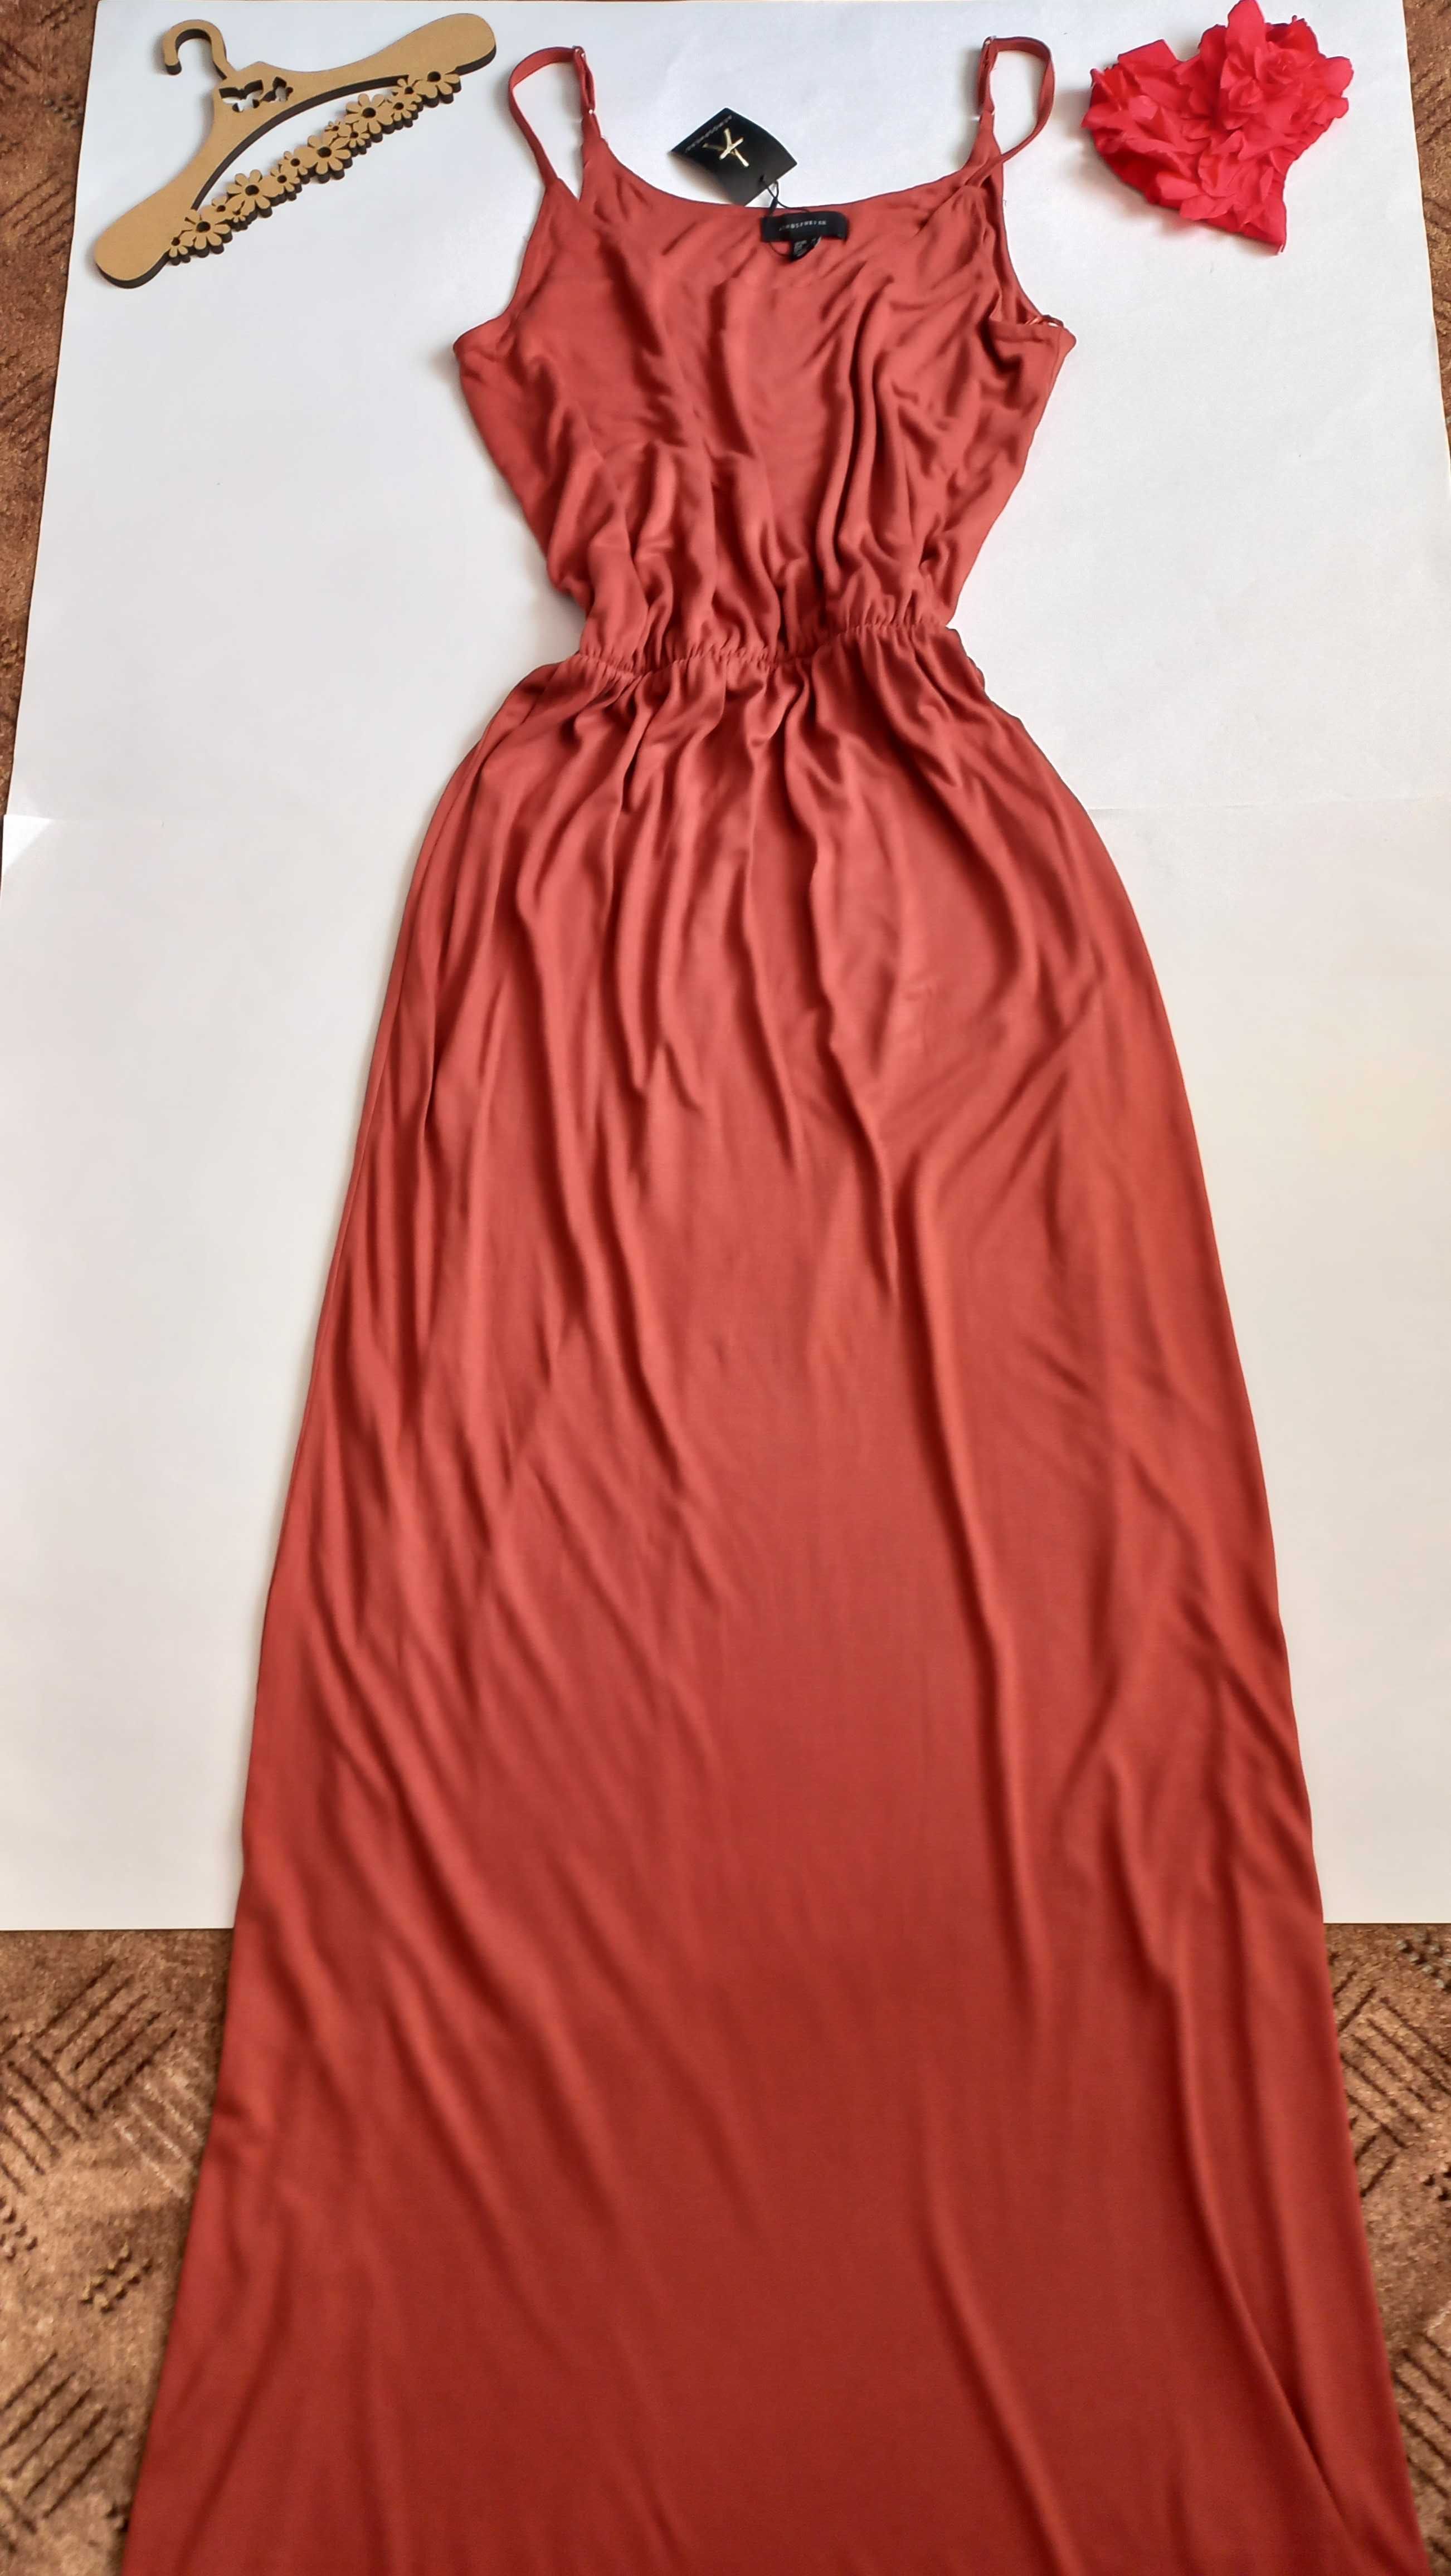 Довга сукня сарафан 50 52 розмір нове  натуральна тканина